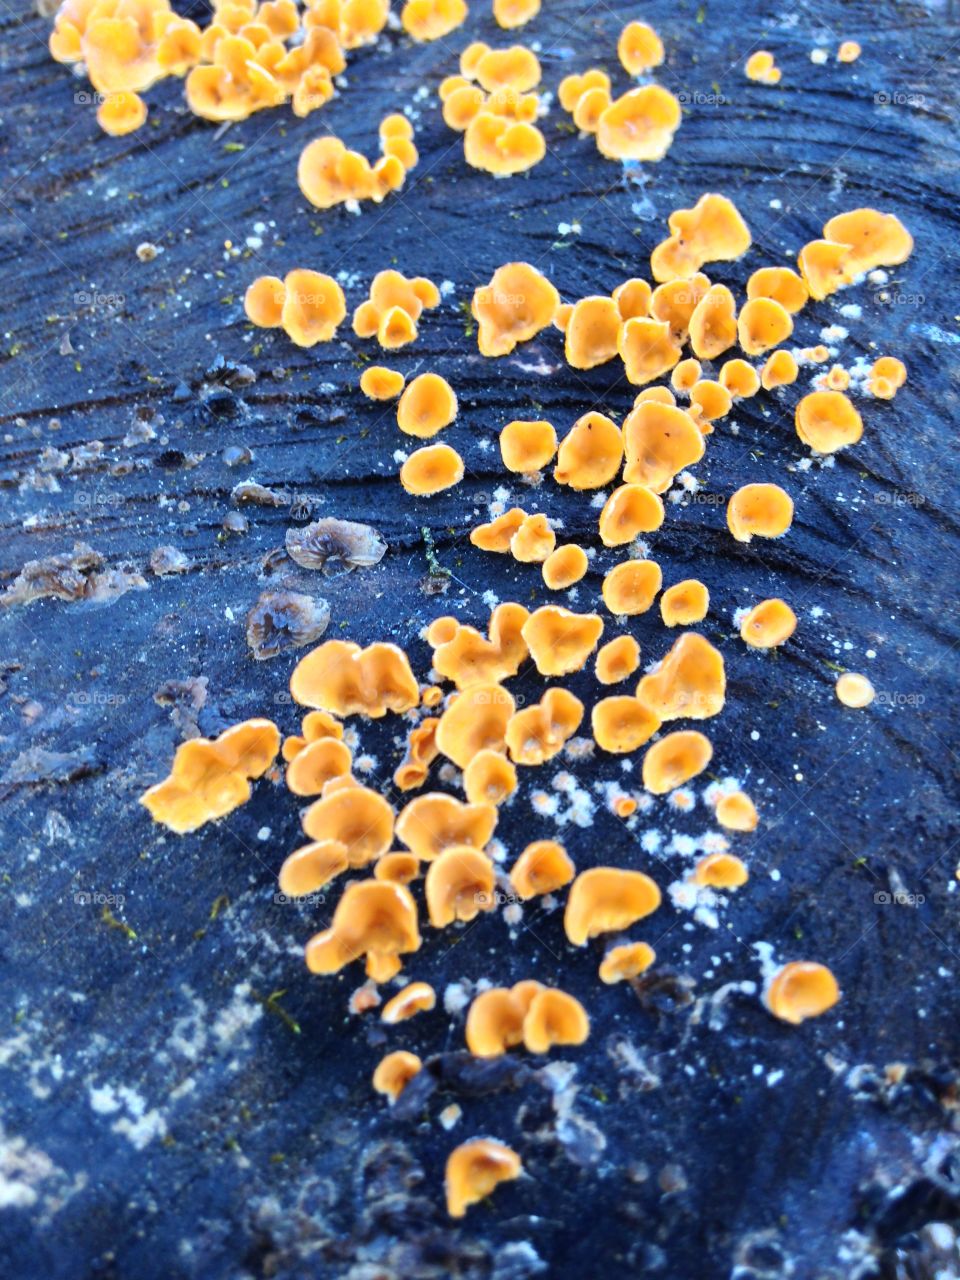 Pretty fungus 